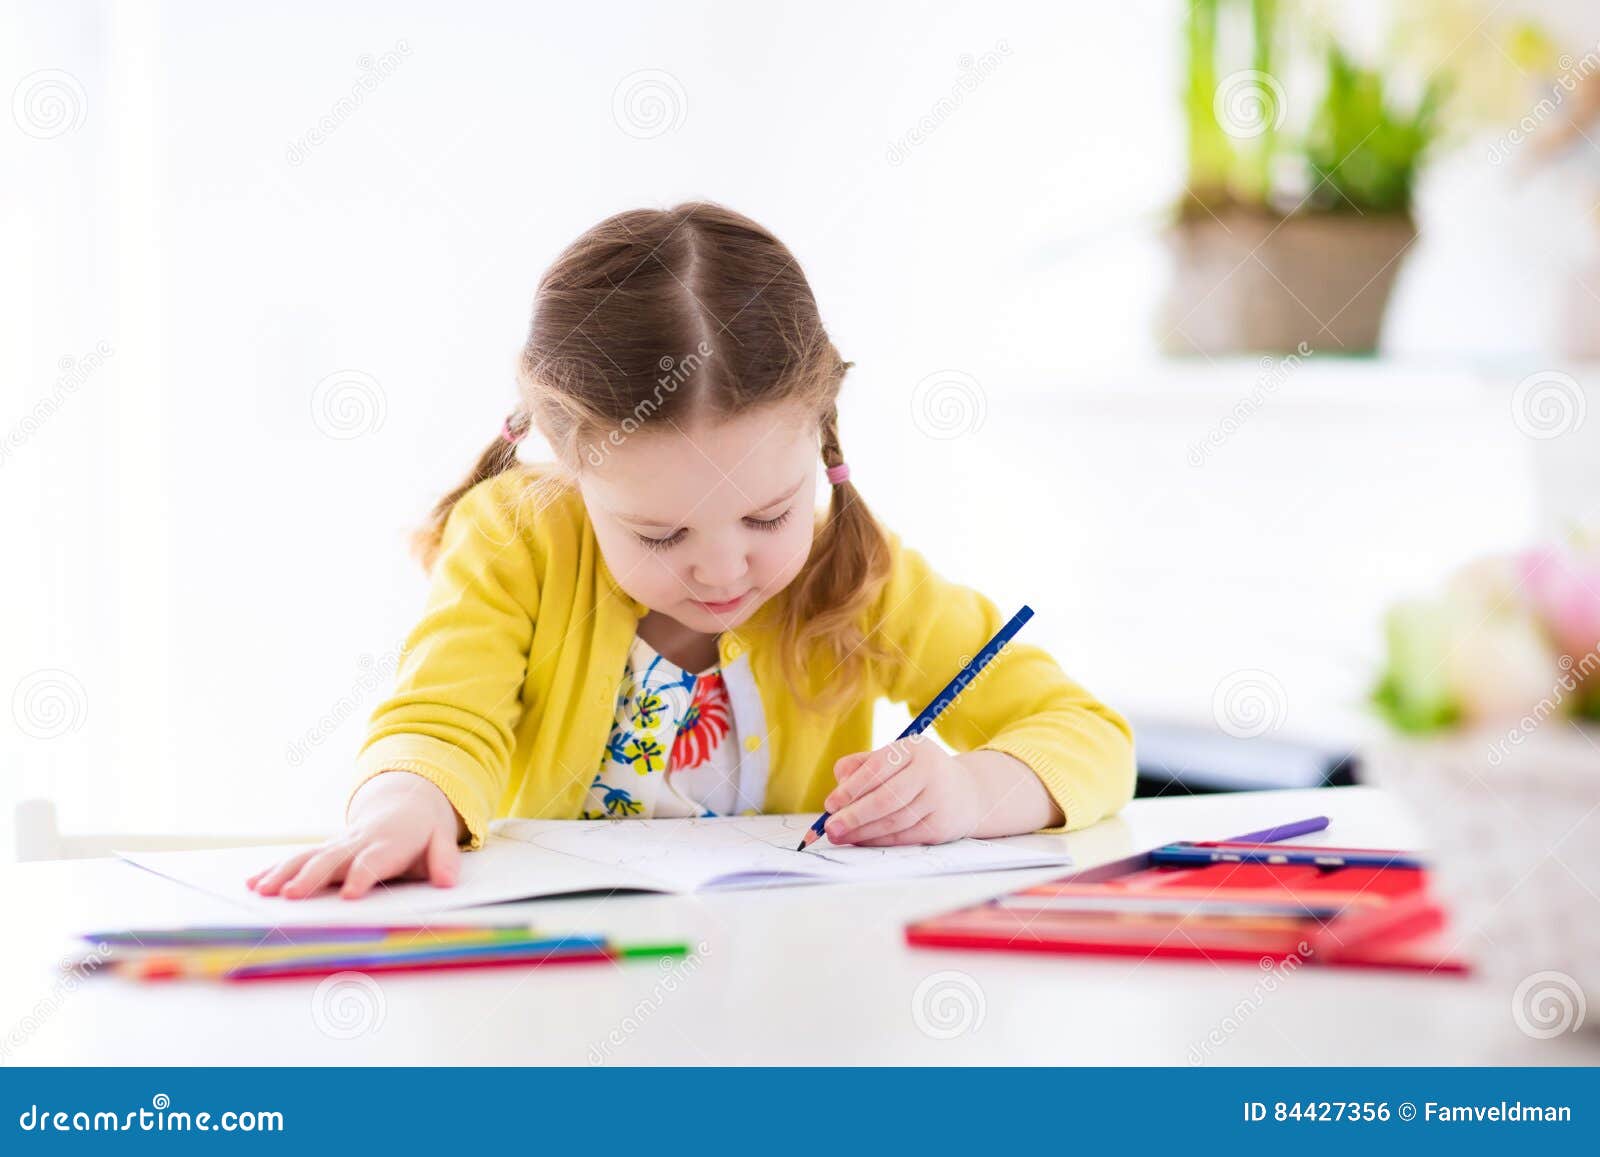 kids read, write and paint. child doing homework.